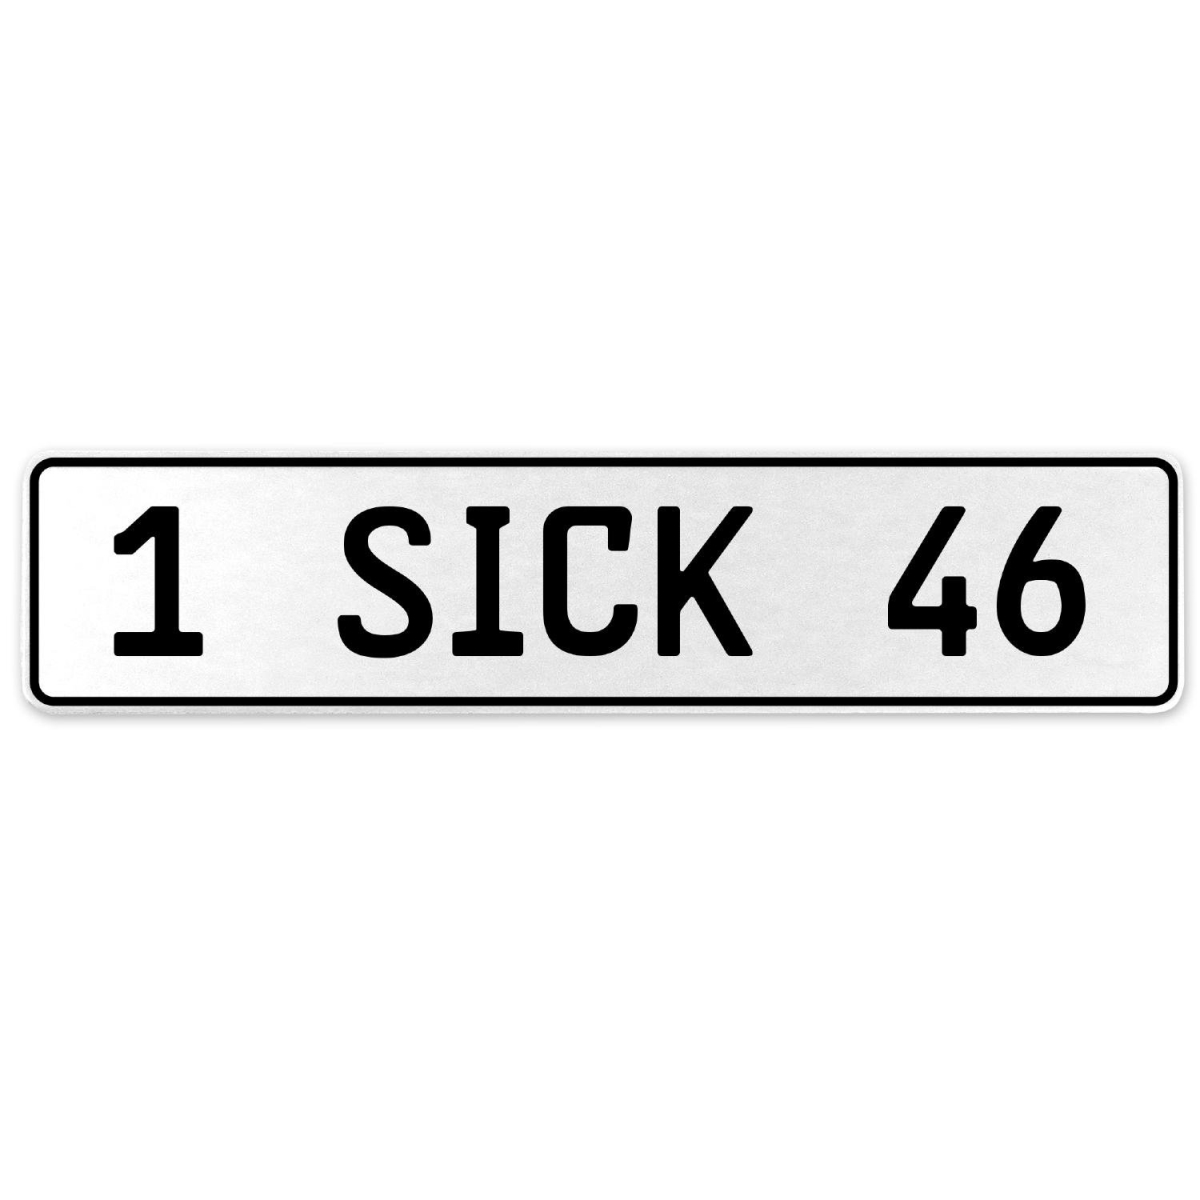 554445 1 Sick 46 - White Aluminum Street Sign Mancave Euro Plate Name Door Sign Wall